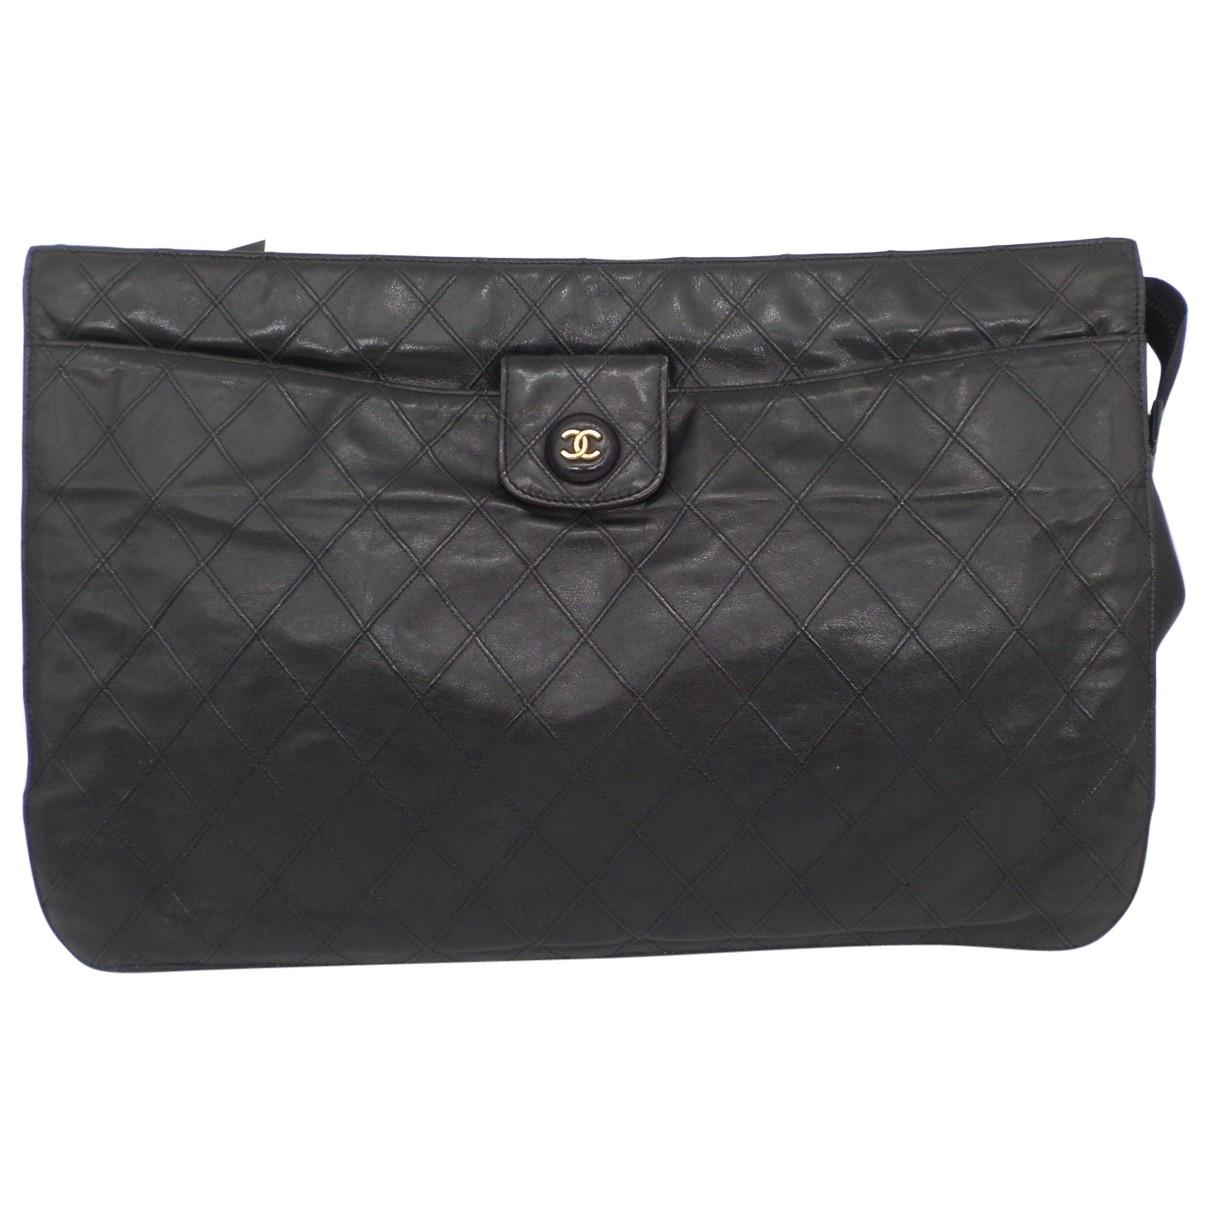 Lyst - Chanel Vintage Timeless/classique Black Leather Clutch Bag in Black